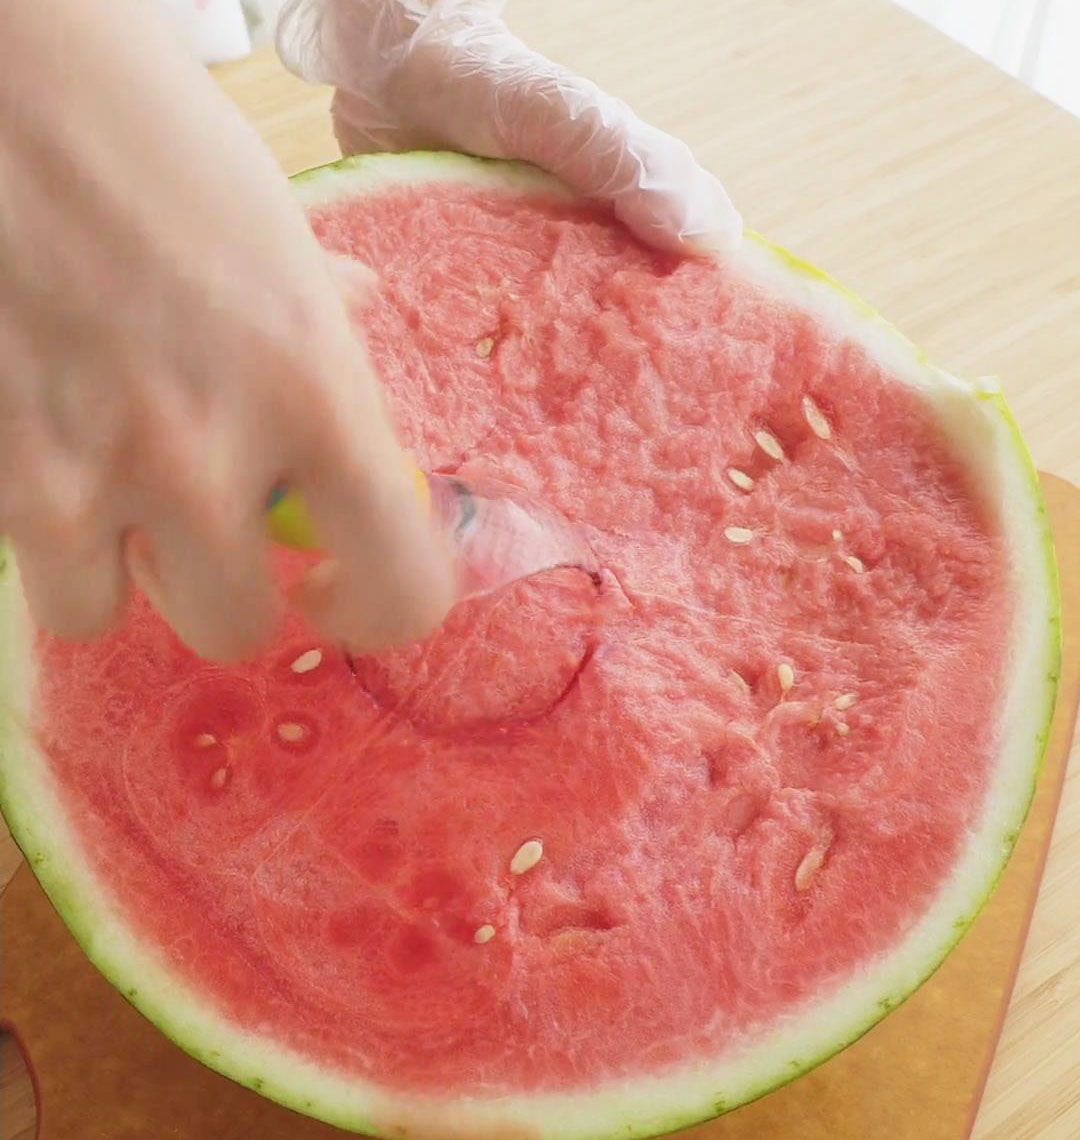 Scoop out enough watermelon flesh